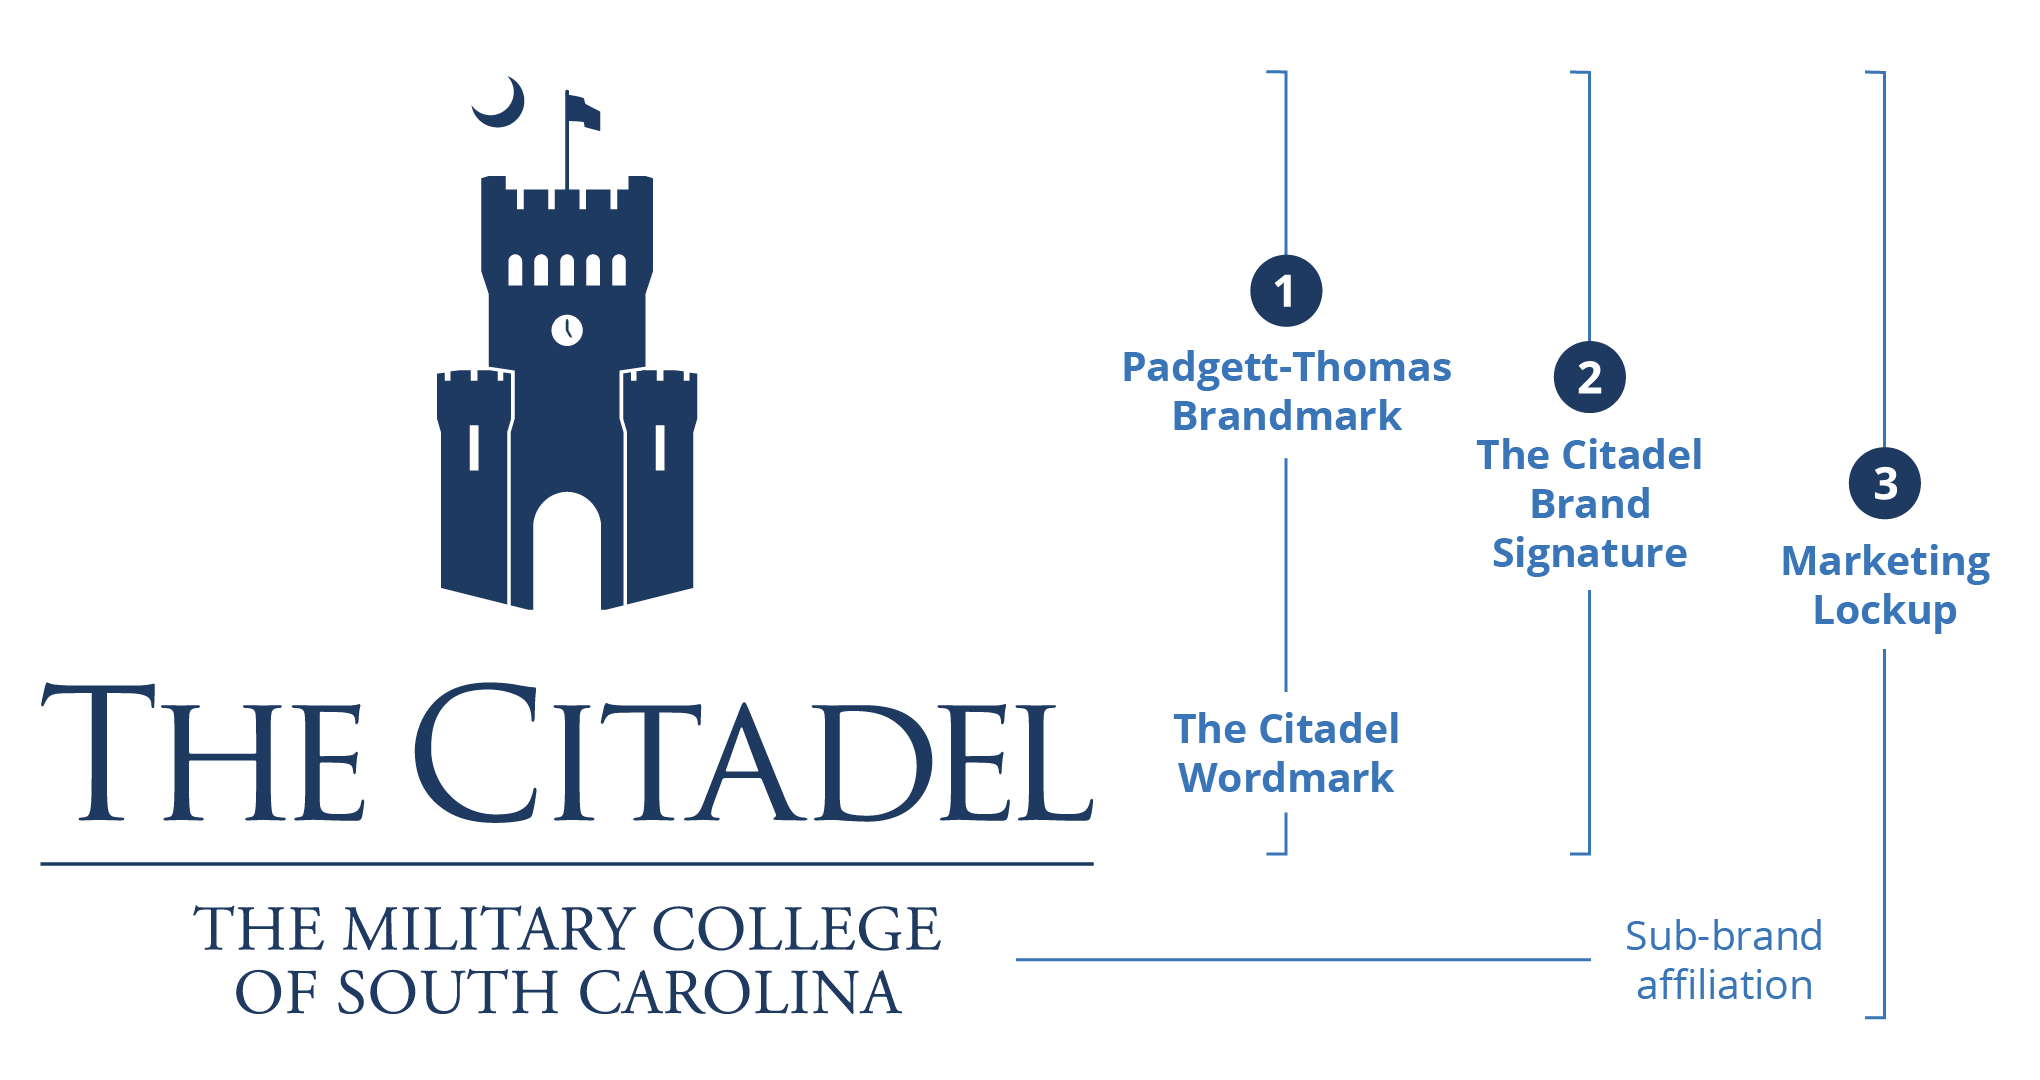 The Citadel Rebukes Social Media Reports Of On-Campus 'Brothel' - FITSNews